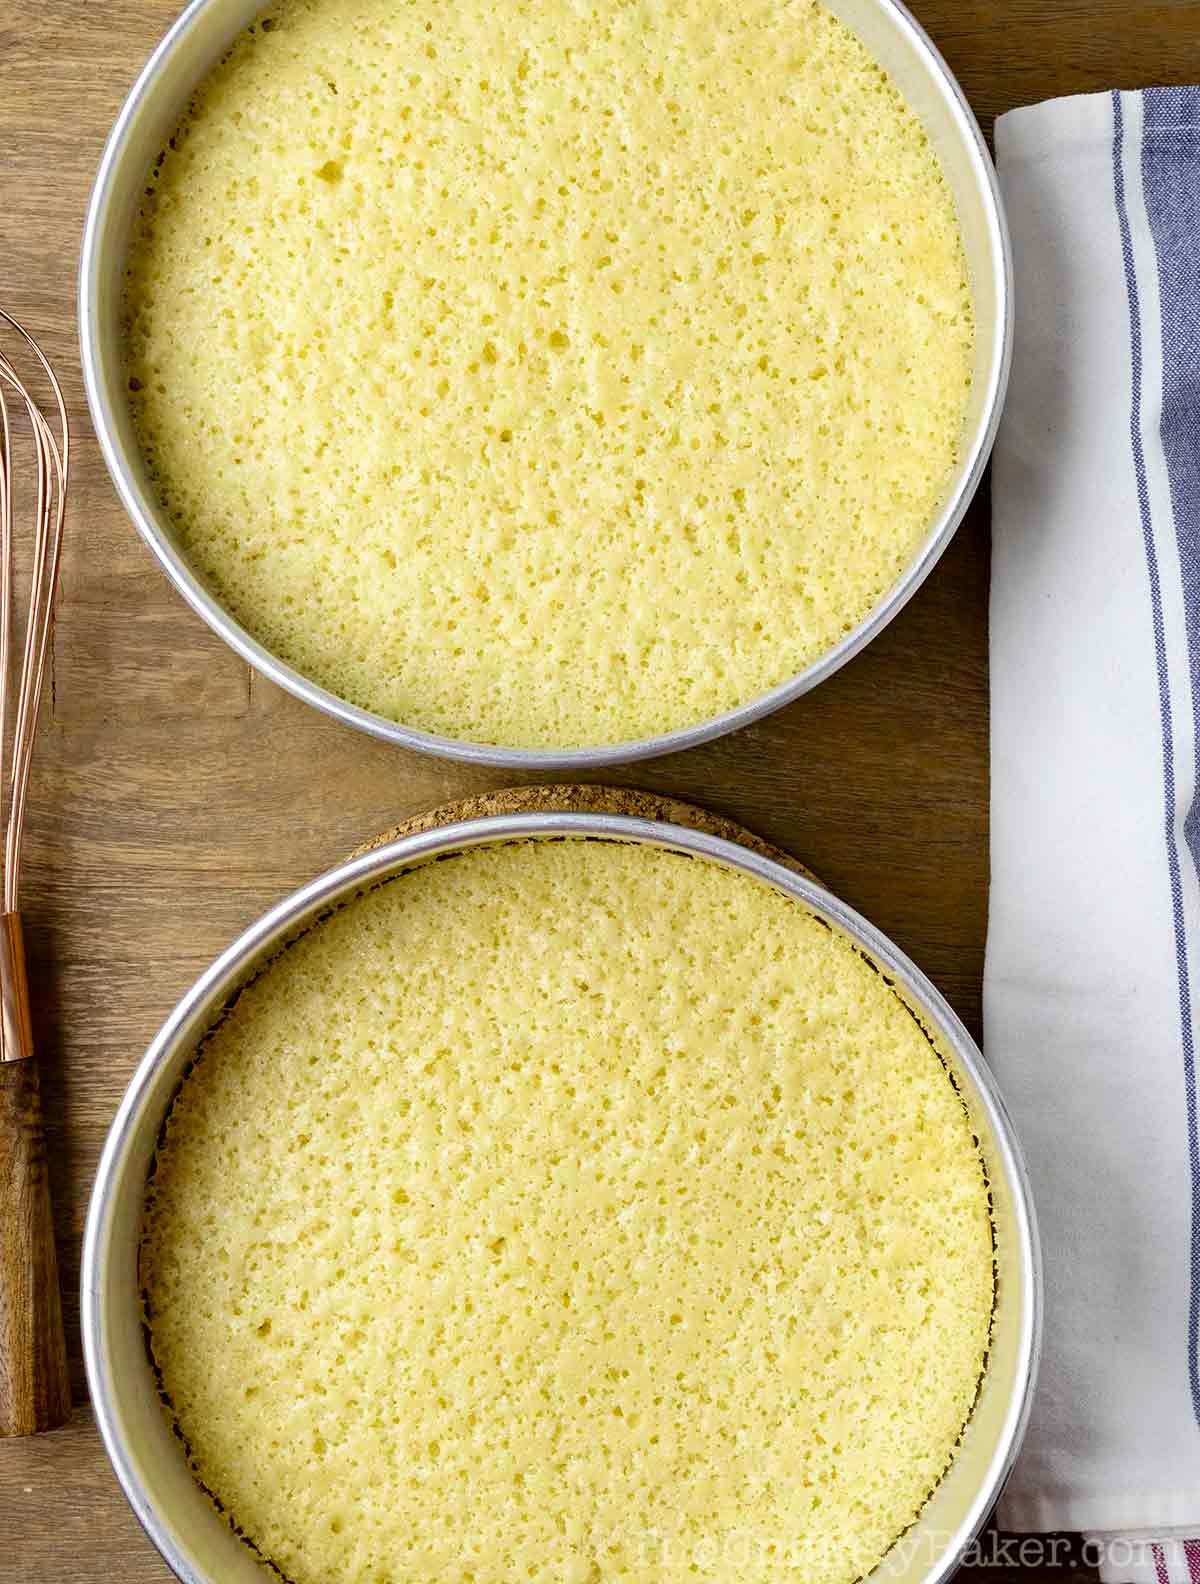 Freshly baked vanilla cake layers in cake pans.